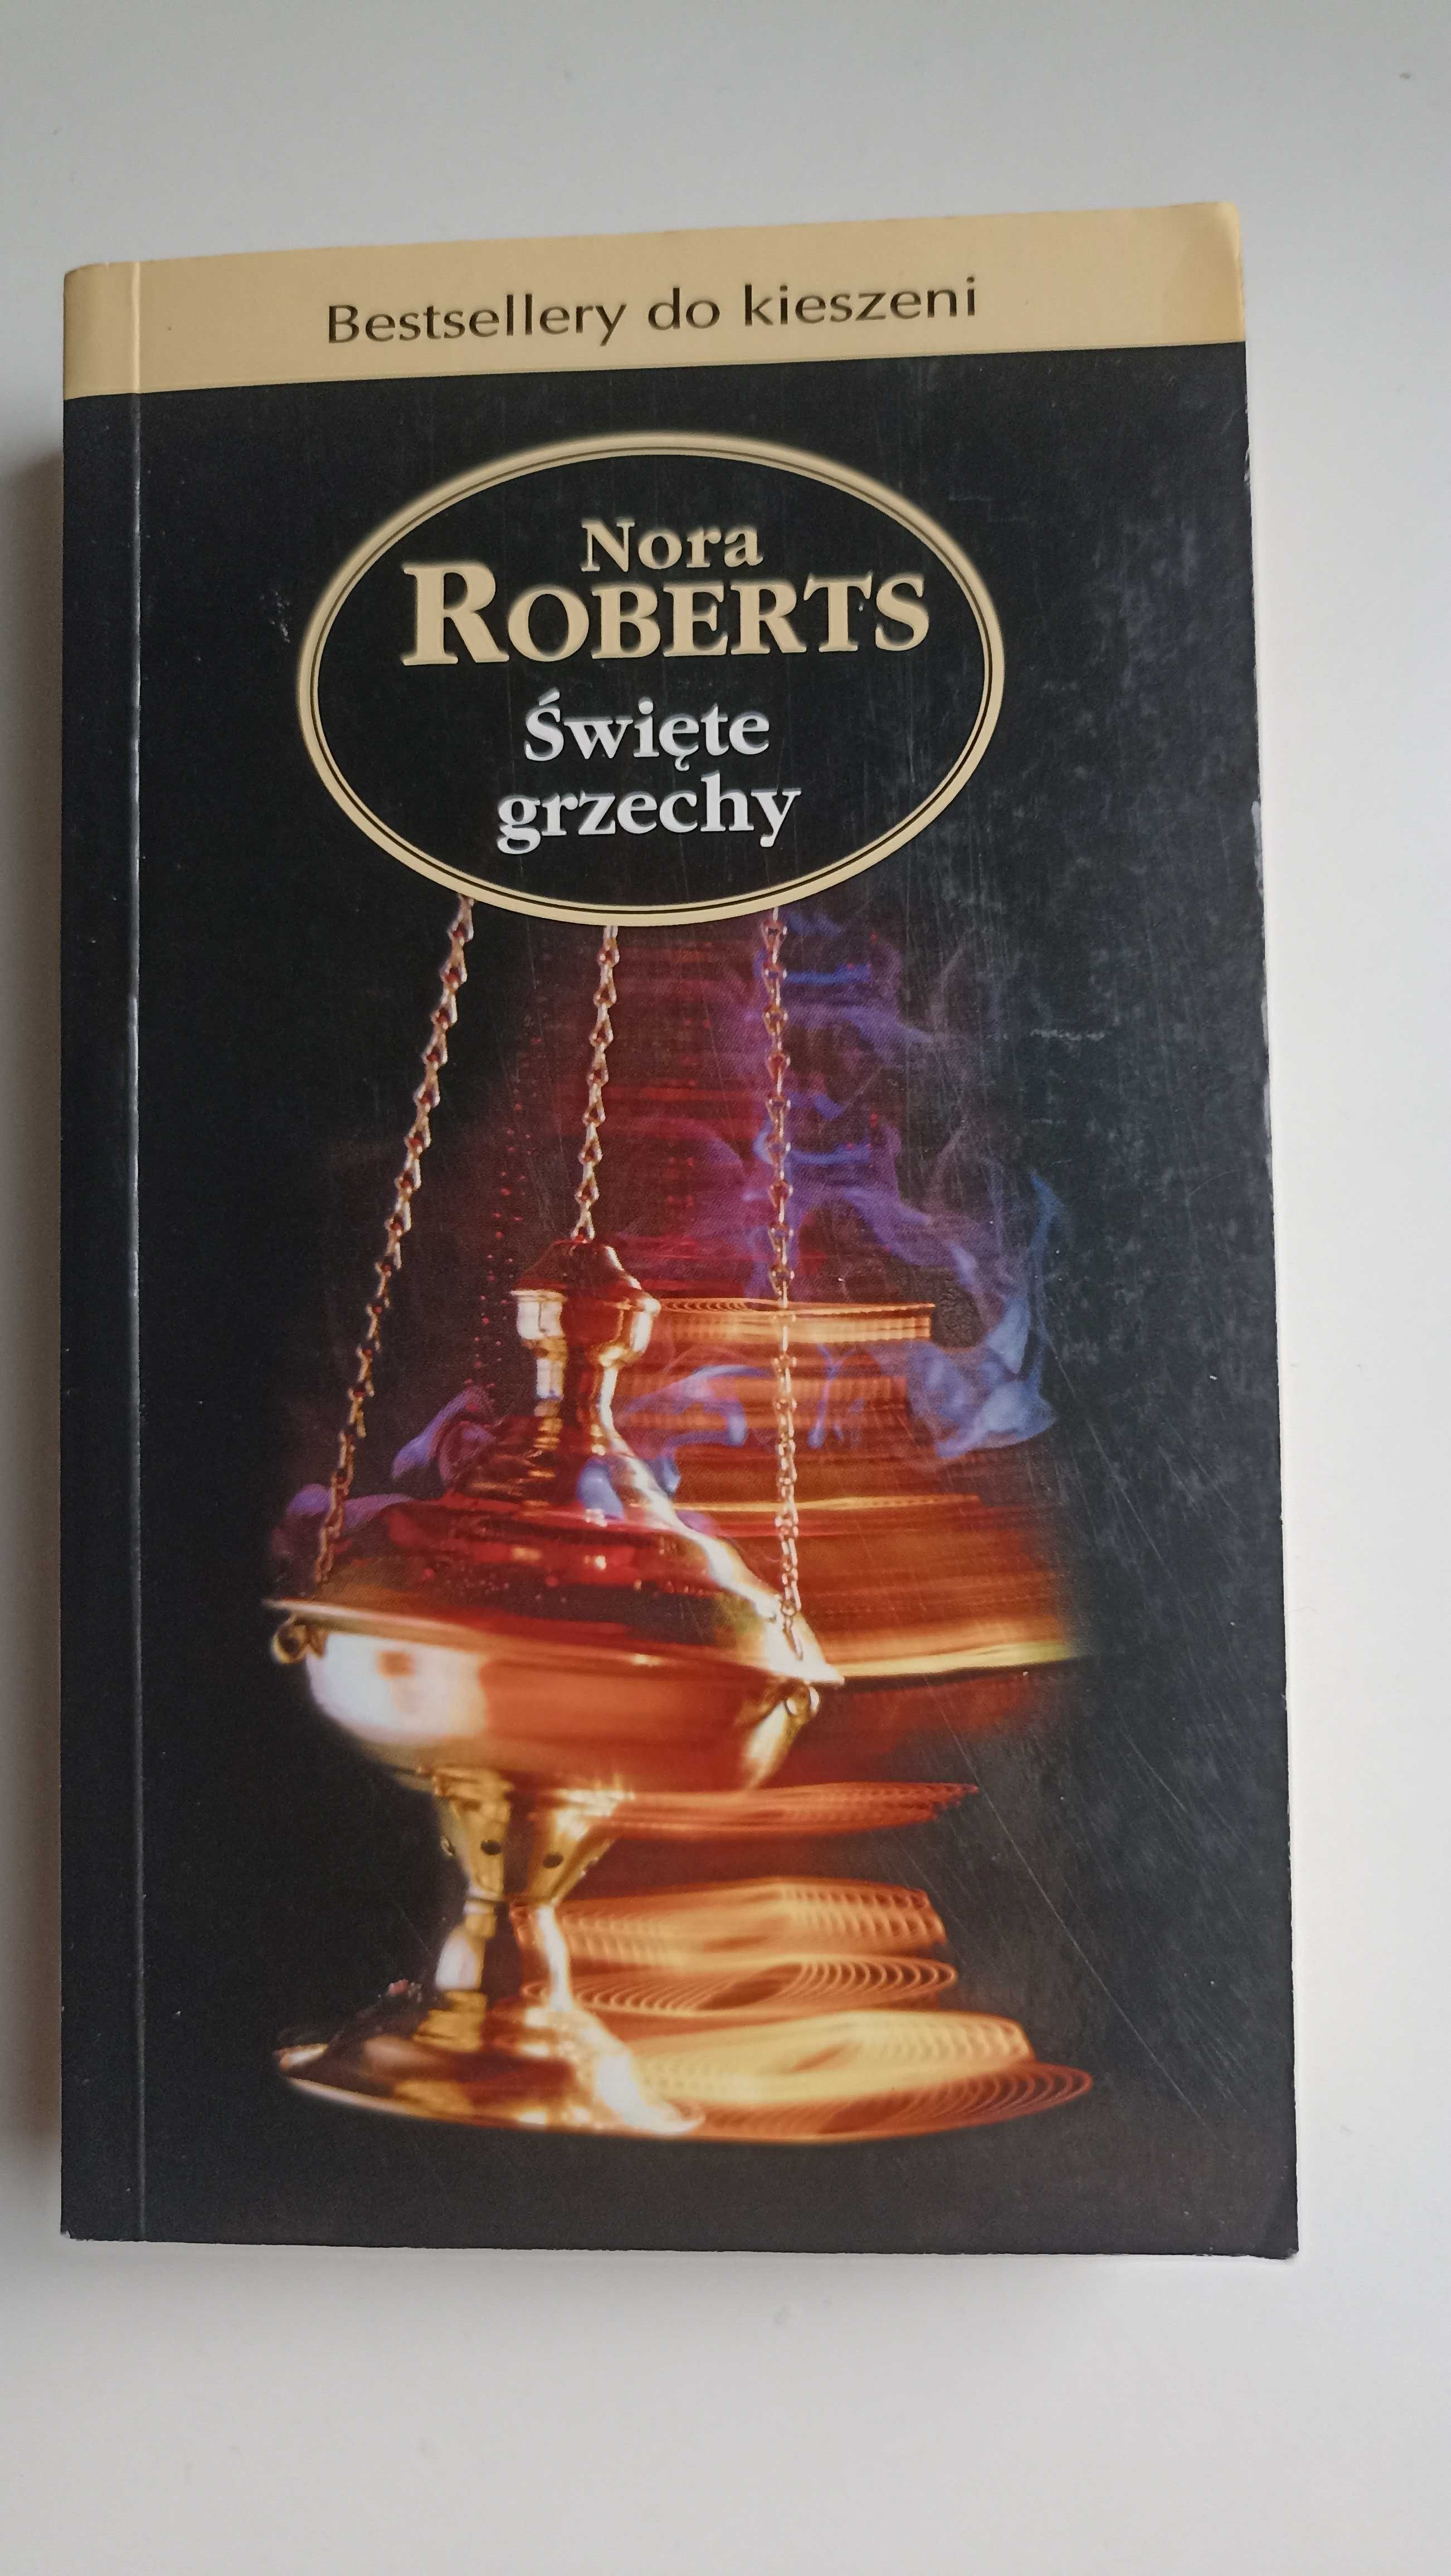 Książka Nora Roberts " Święte grzechy"